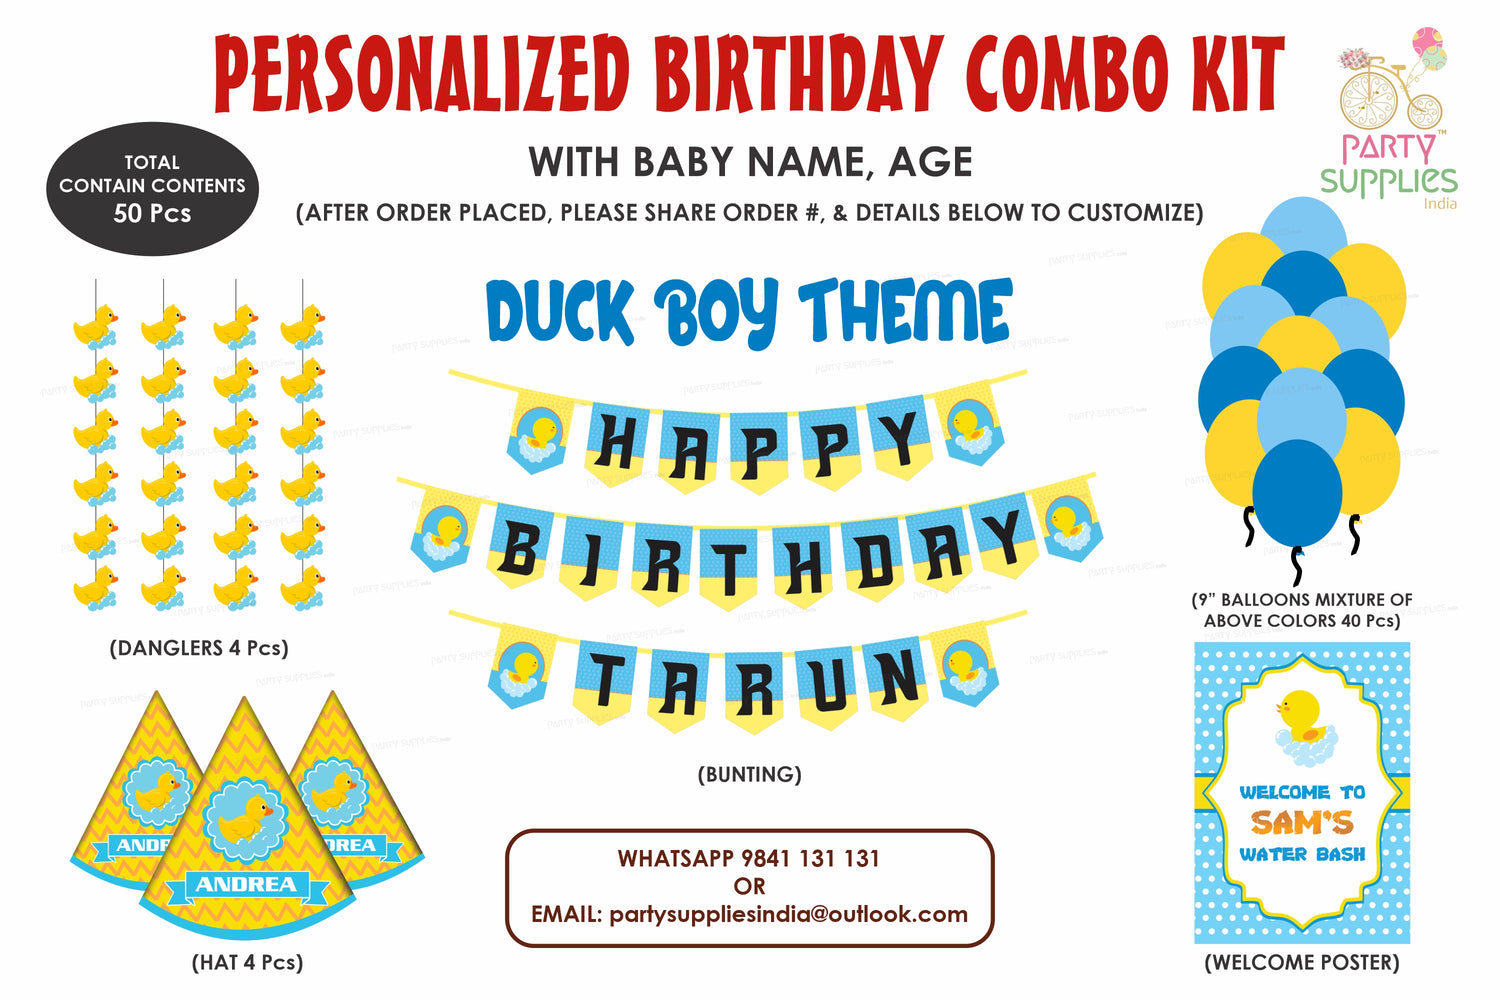 PSI Duck Boy Theme Heritage Kit